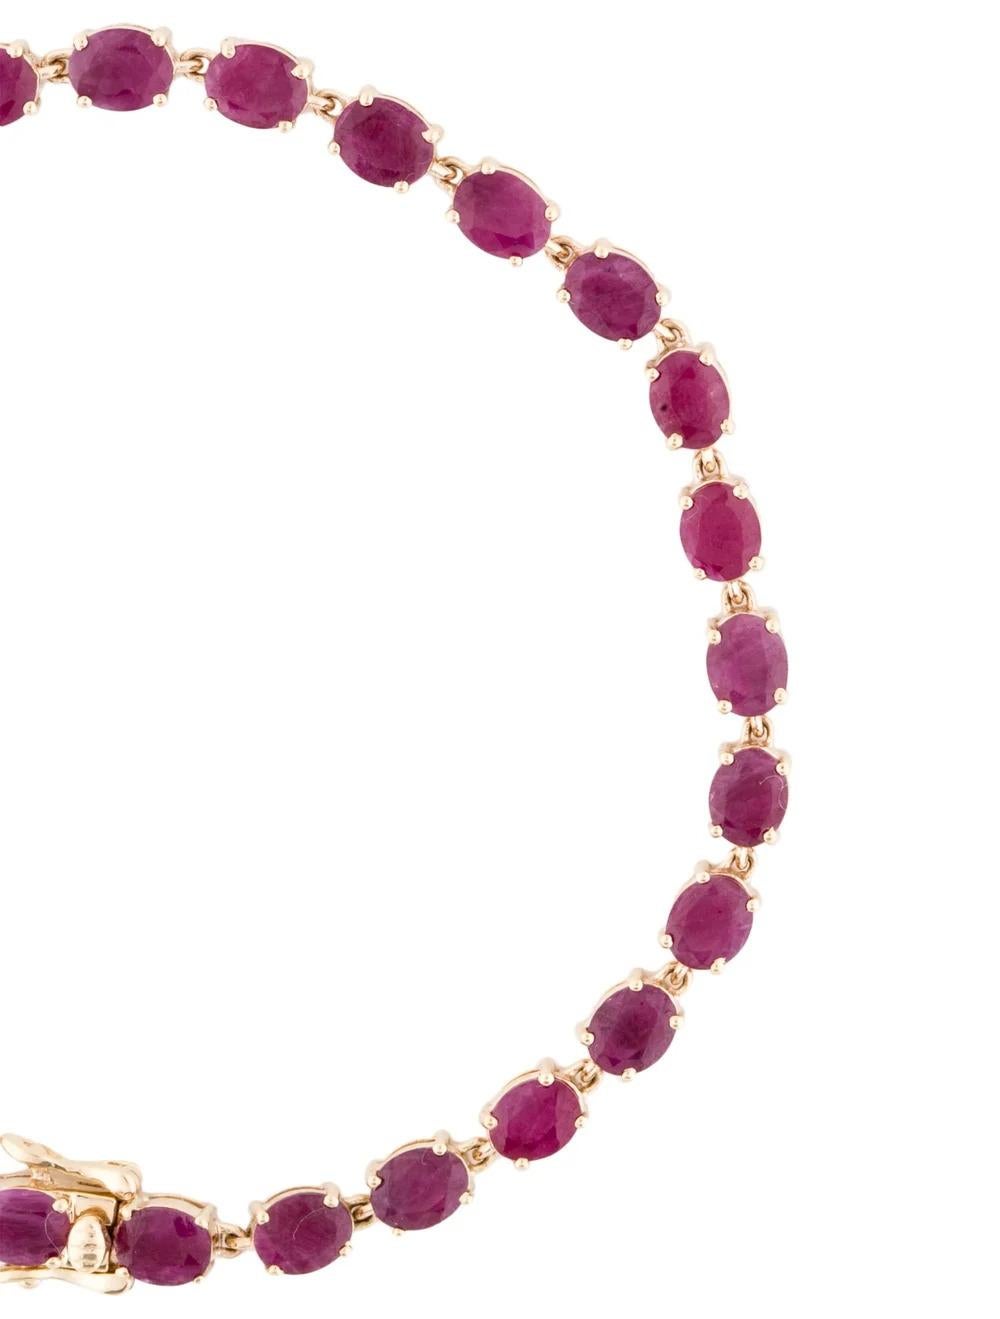 Oval Cut 14K Ruby Tennis Bracelet, 10.36ctw - Classic Design, Rich Red Gemstones For Sale